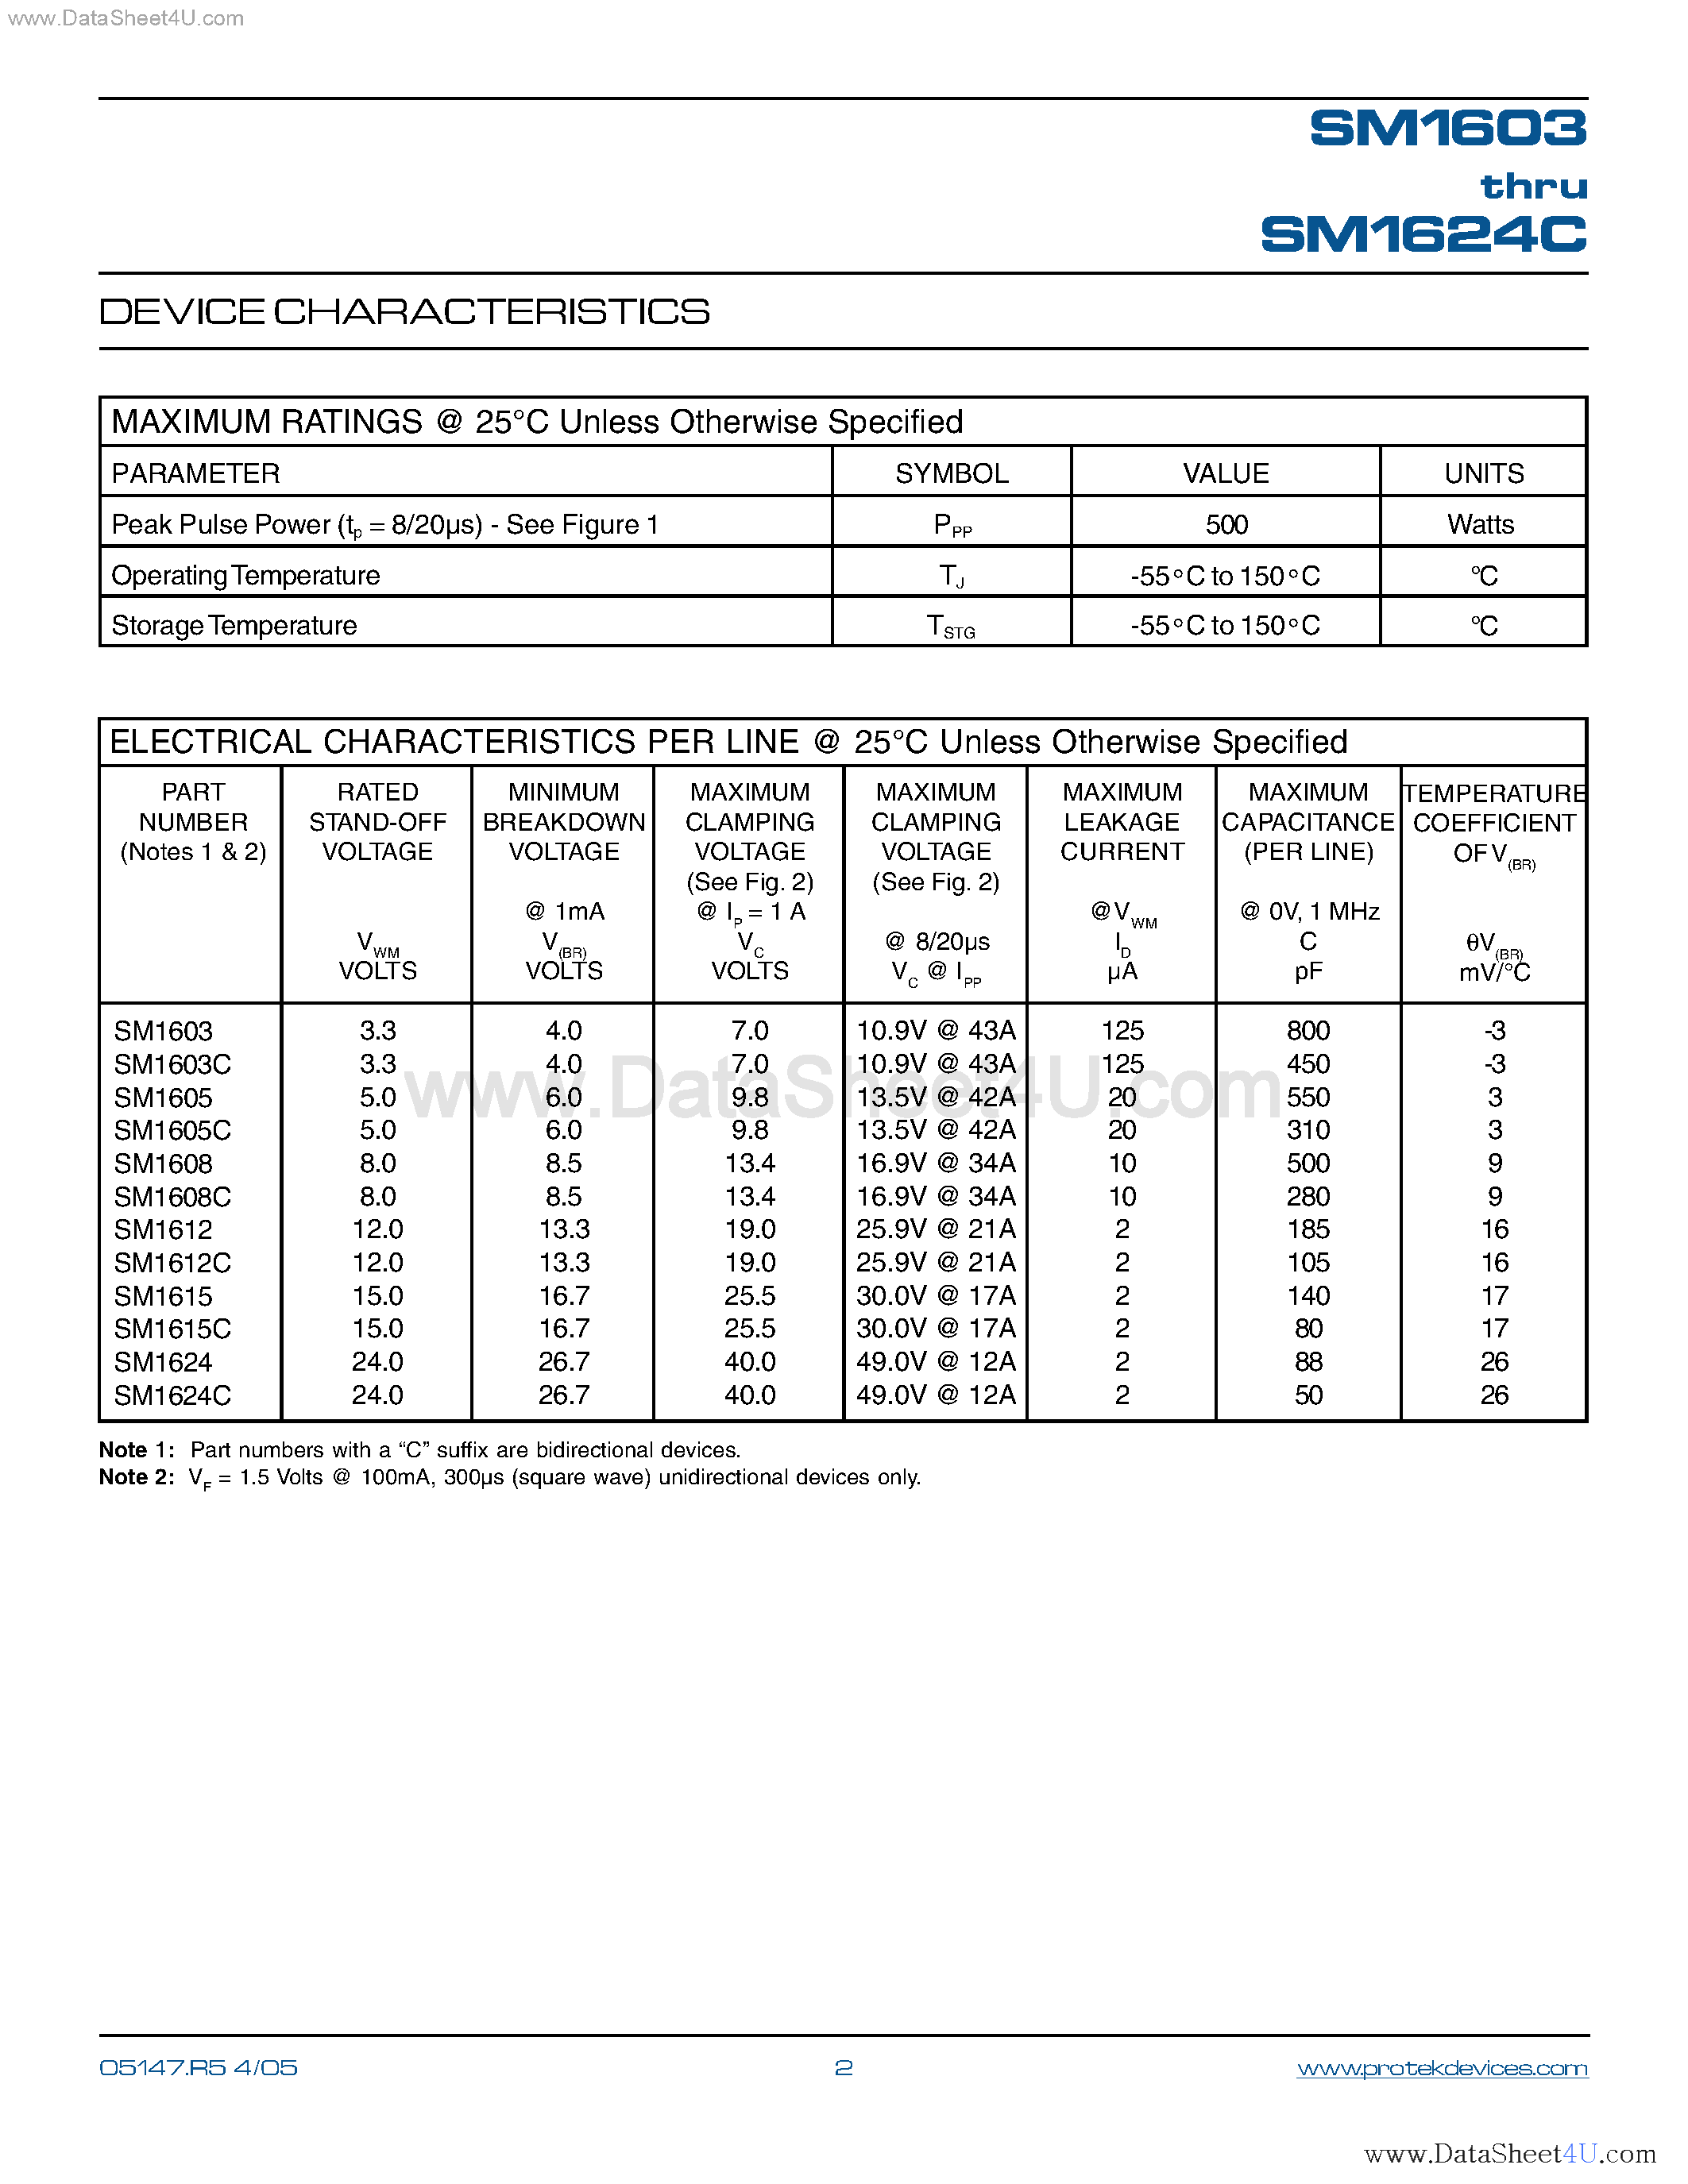 Datasheet SM1603 - (SM1603 - SM1624) STANDARD CAPACITANCE TVS ARRAY page 2